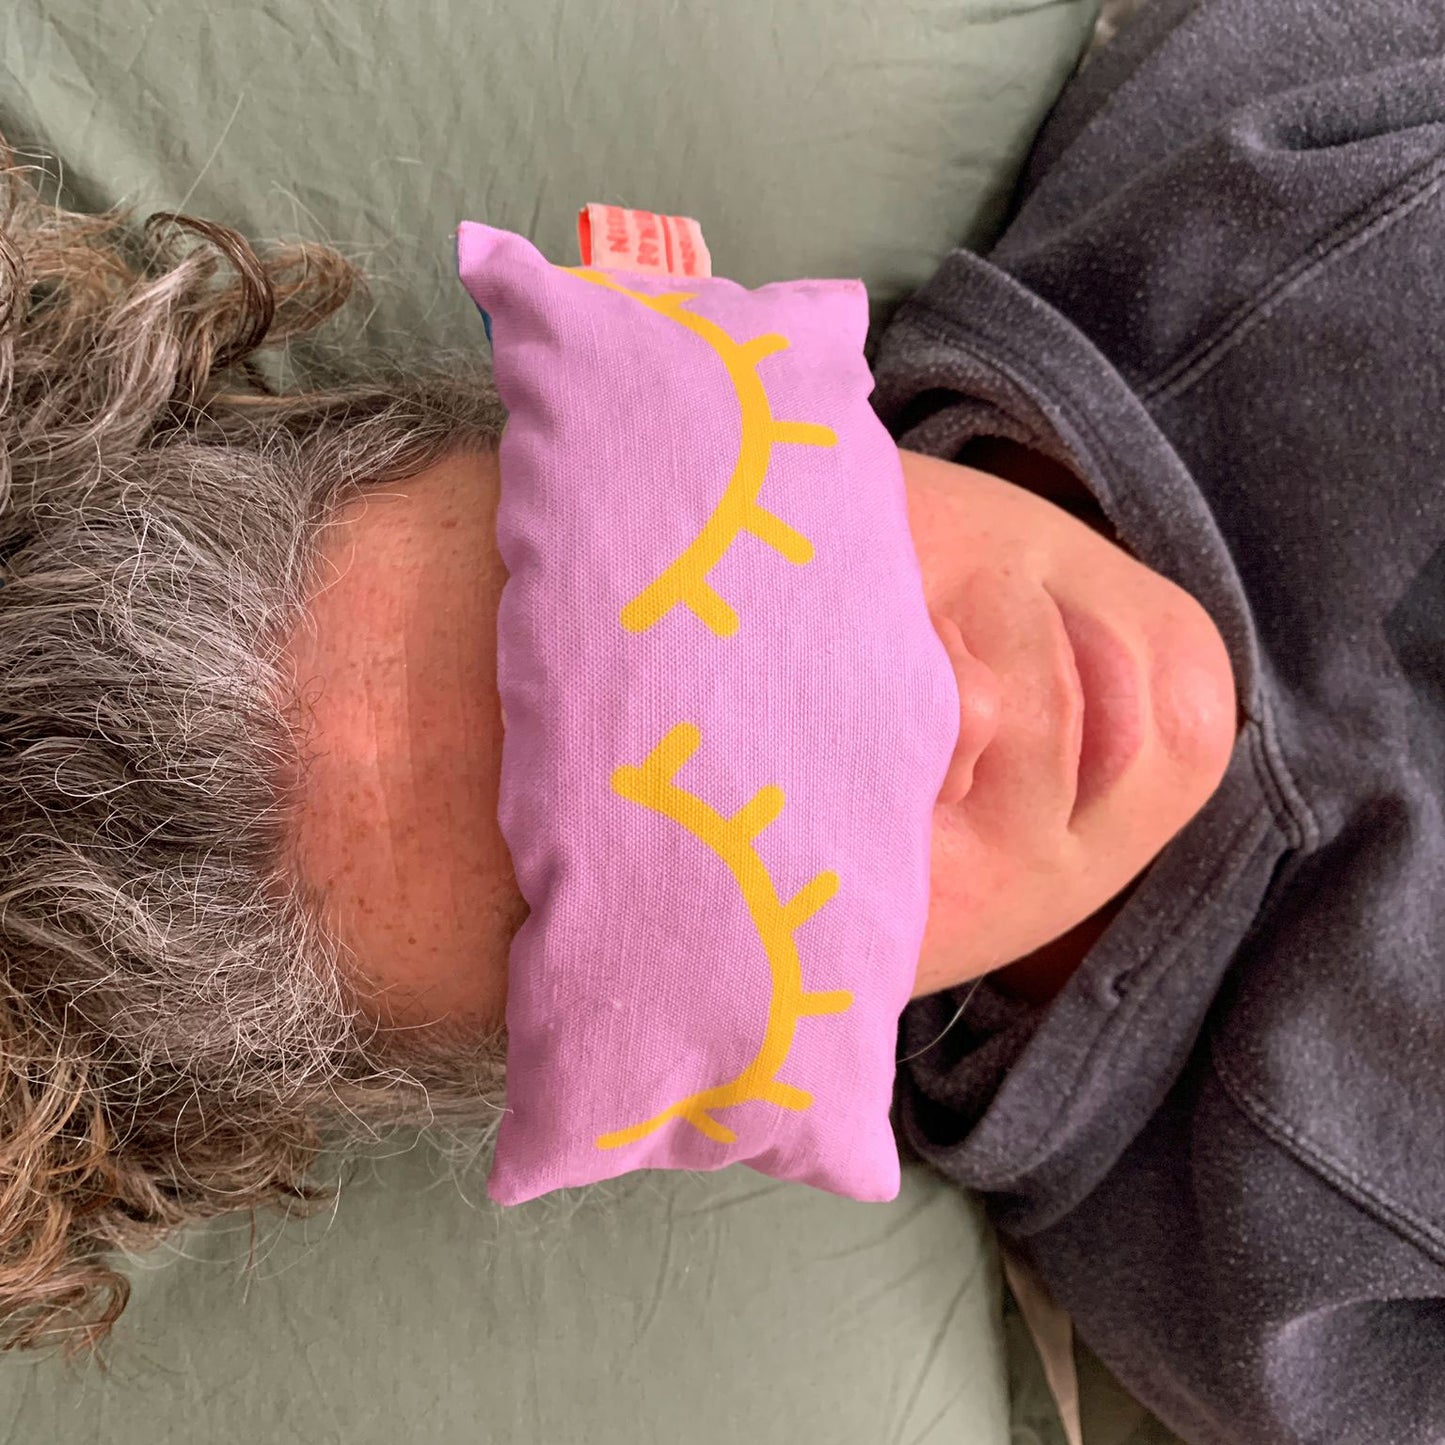 Violet Handmade Lavender Bag with friendly eyes: for zen, meditation deep sleep and yoga